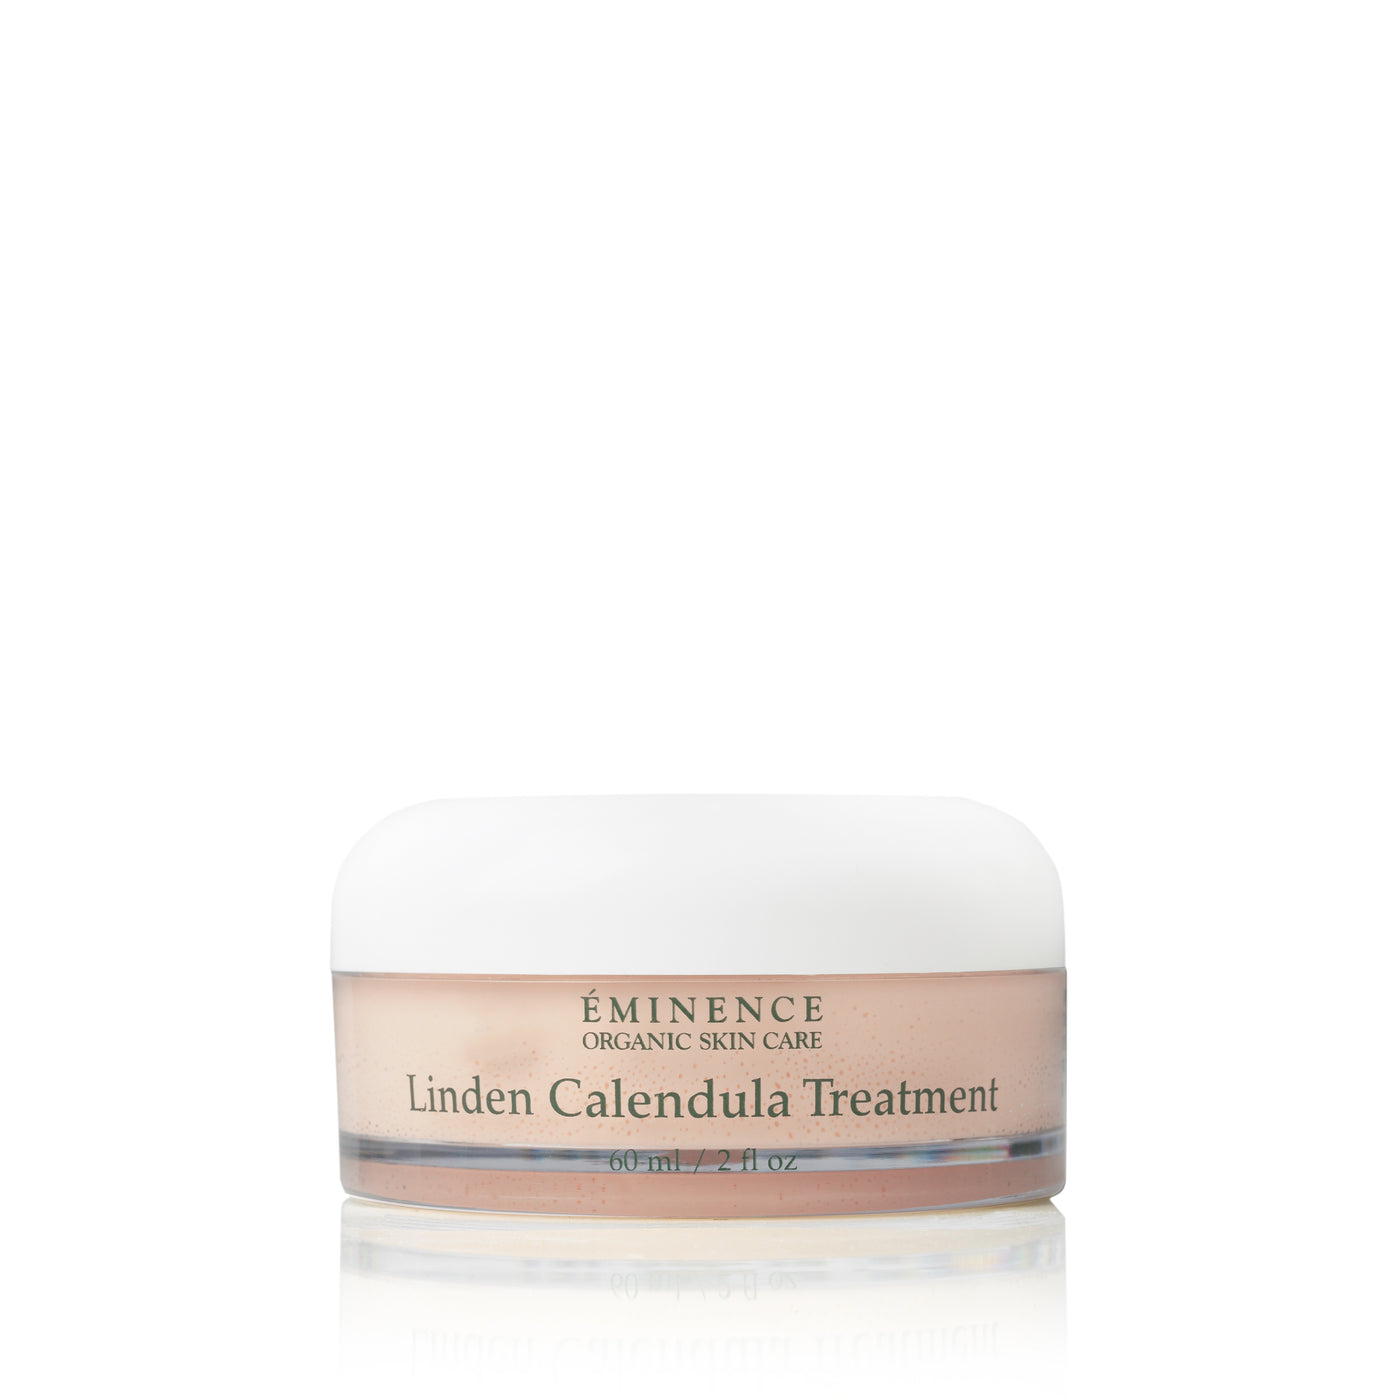 Eminence Organics Linden Calendula Treatment - Radiance Clean Beauty